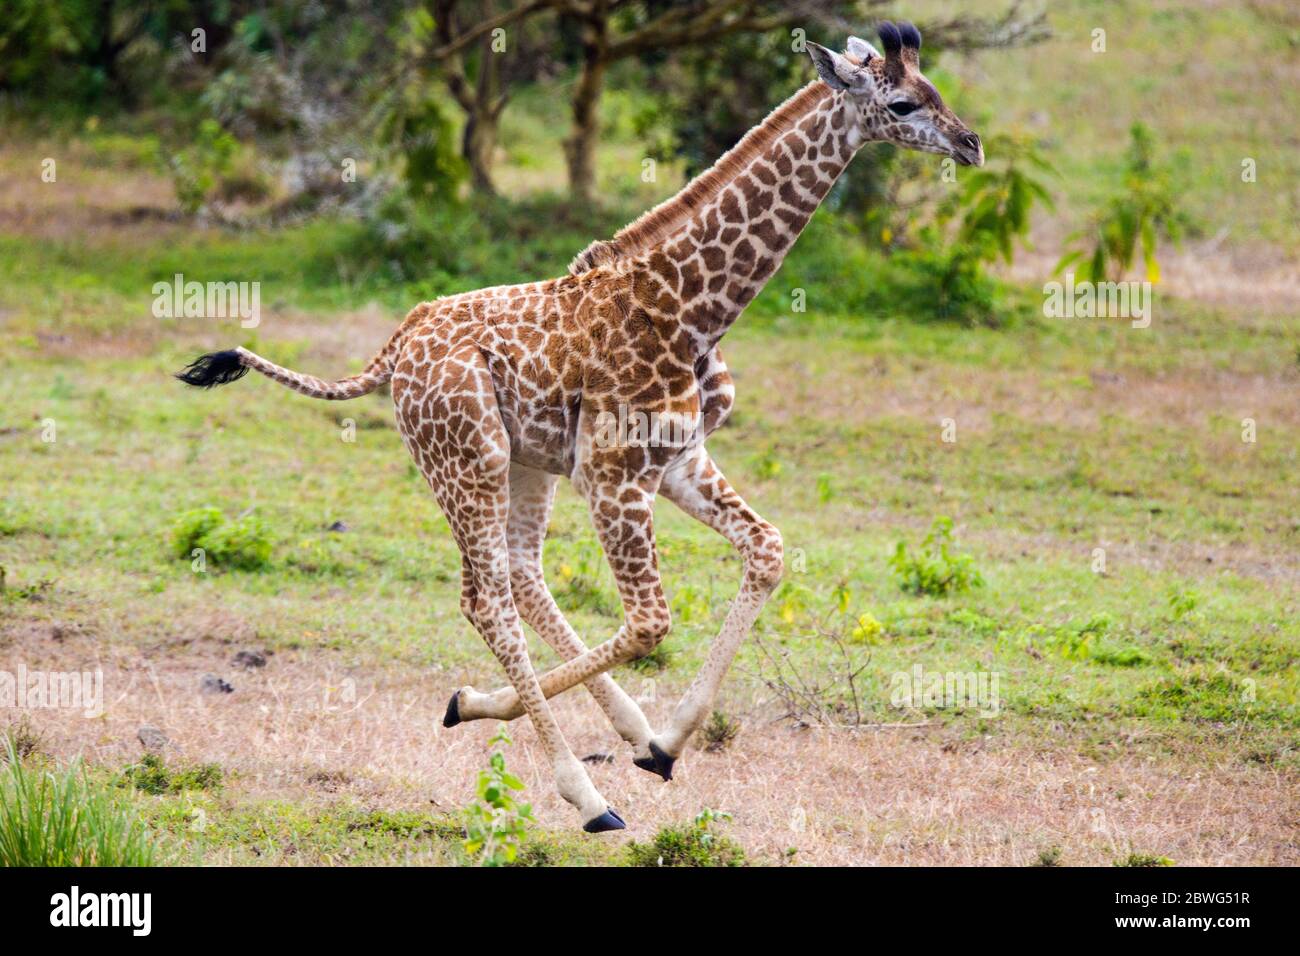 Masai giraffe (Giraffa camelopardalis tippelskirchii) running, Arusha National Park, Tanzania, Africa Stock Photo